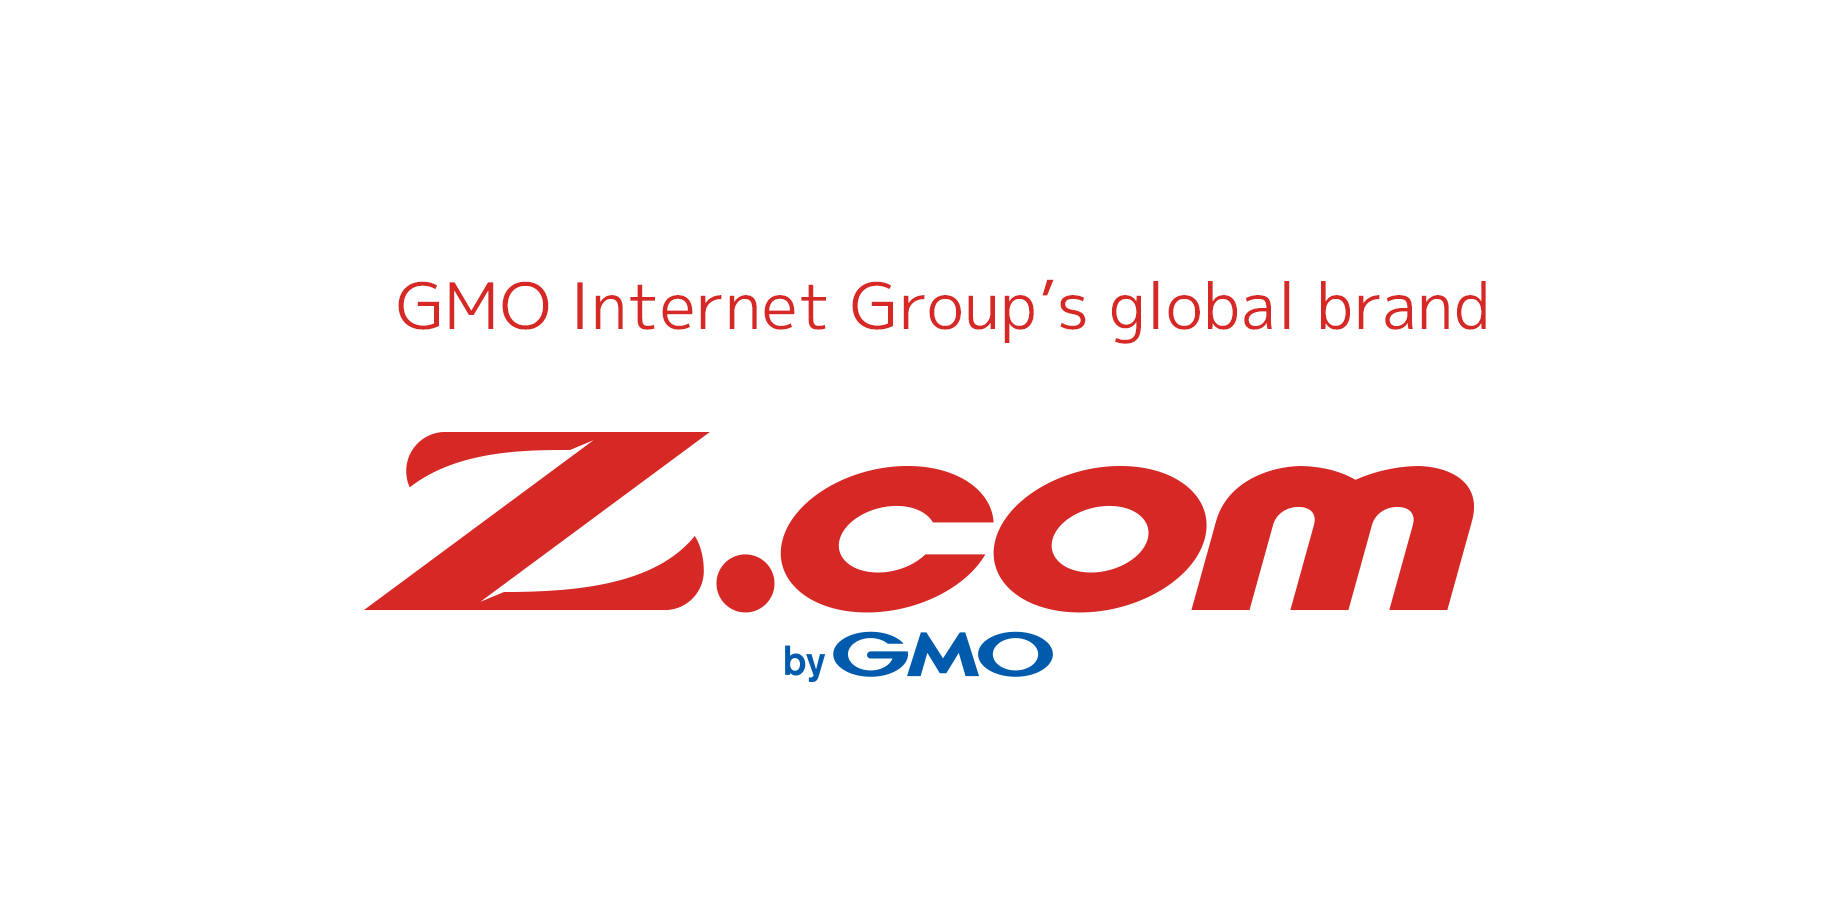 Z.com - GMO Internet Group's global brand